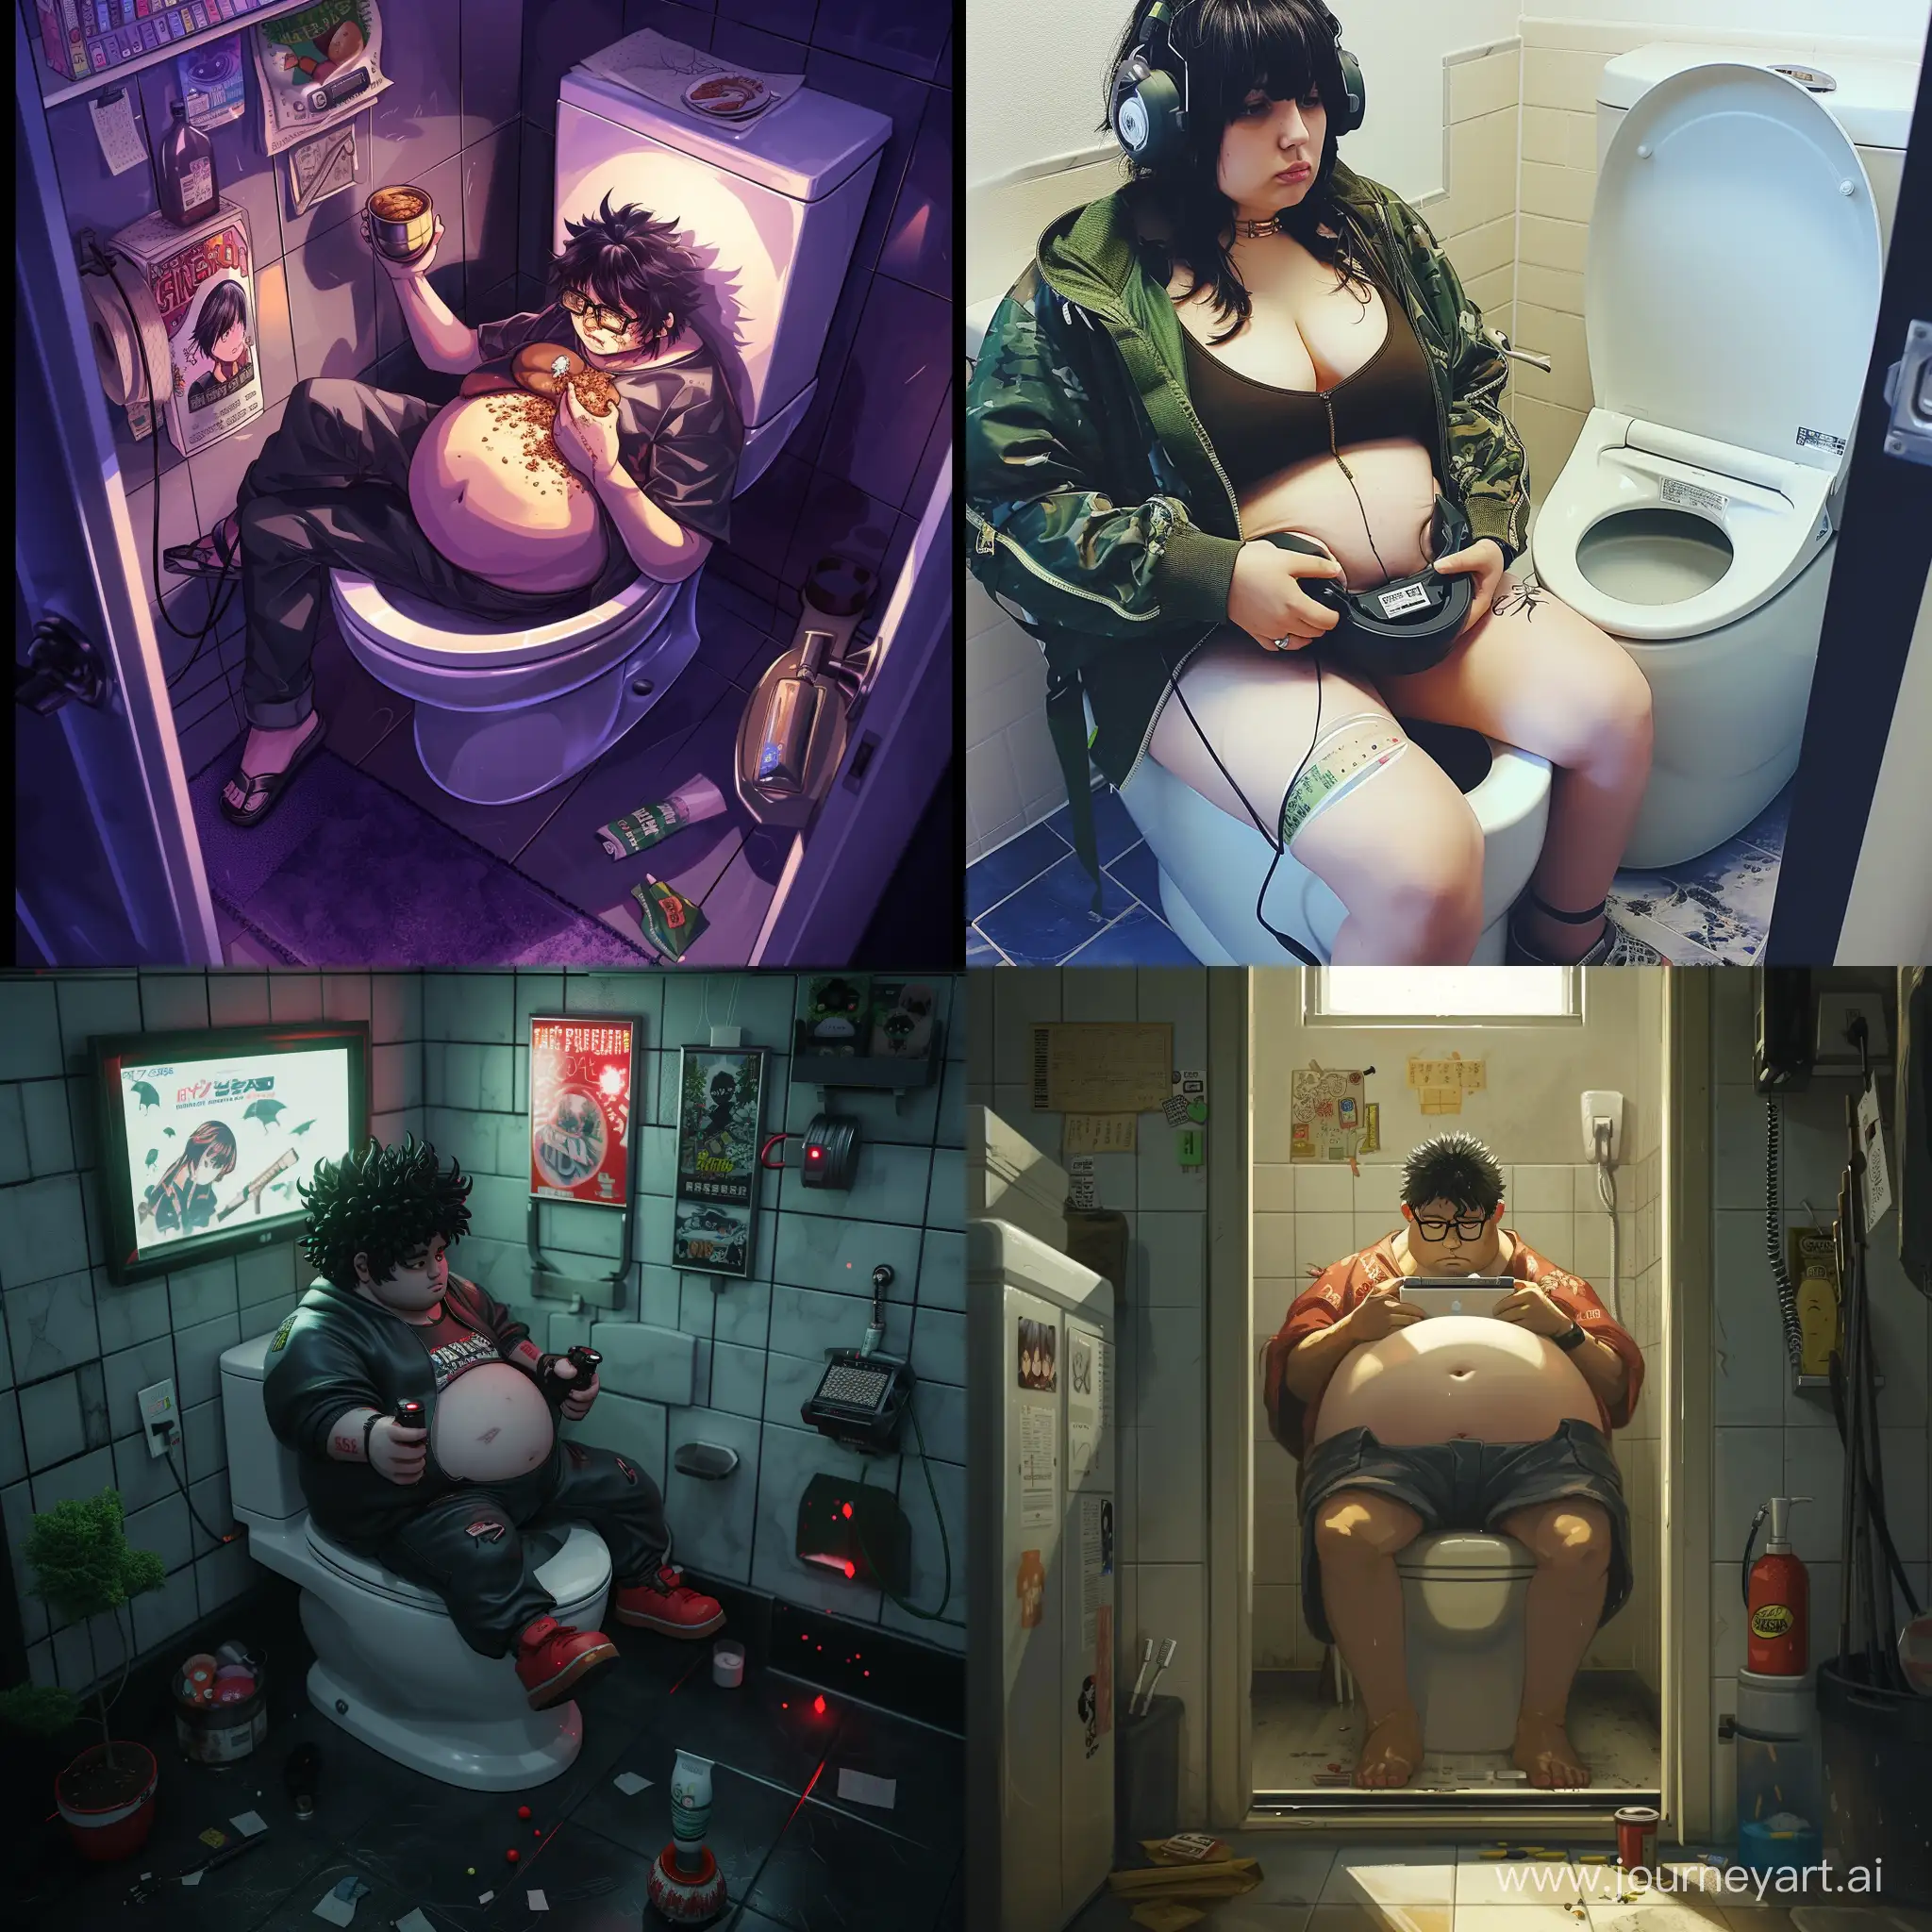 Anime-Enthusiast-Enjoying-Virtual-Worlds-on-the-Toilet